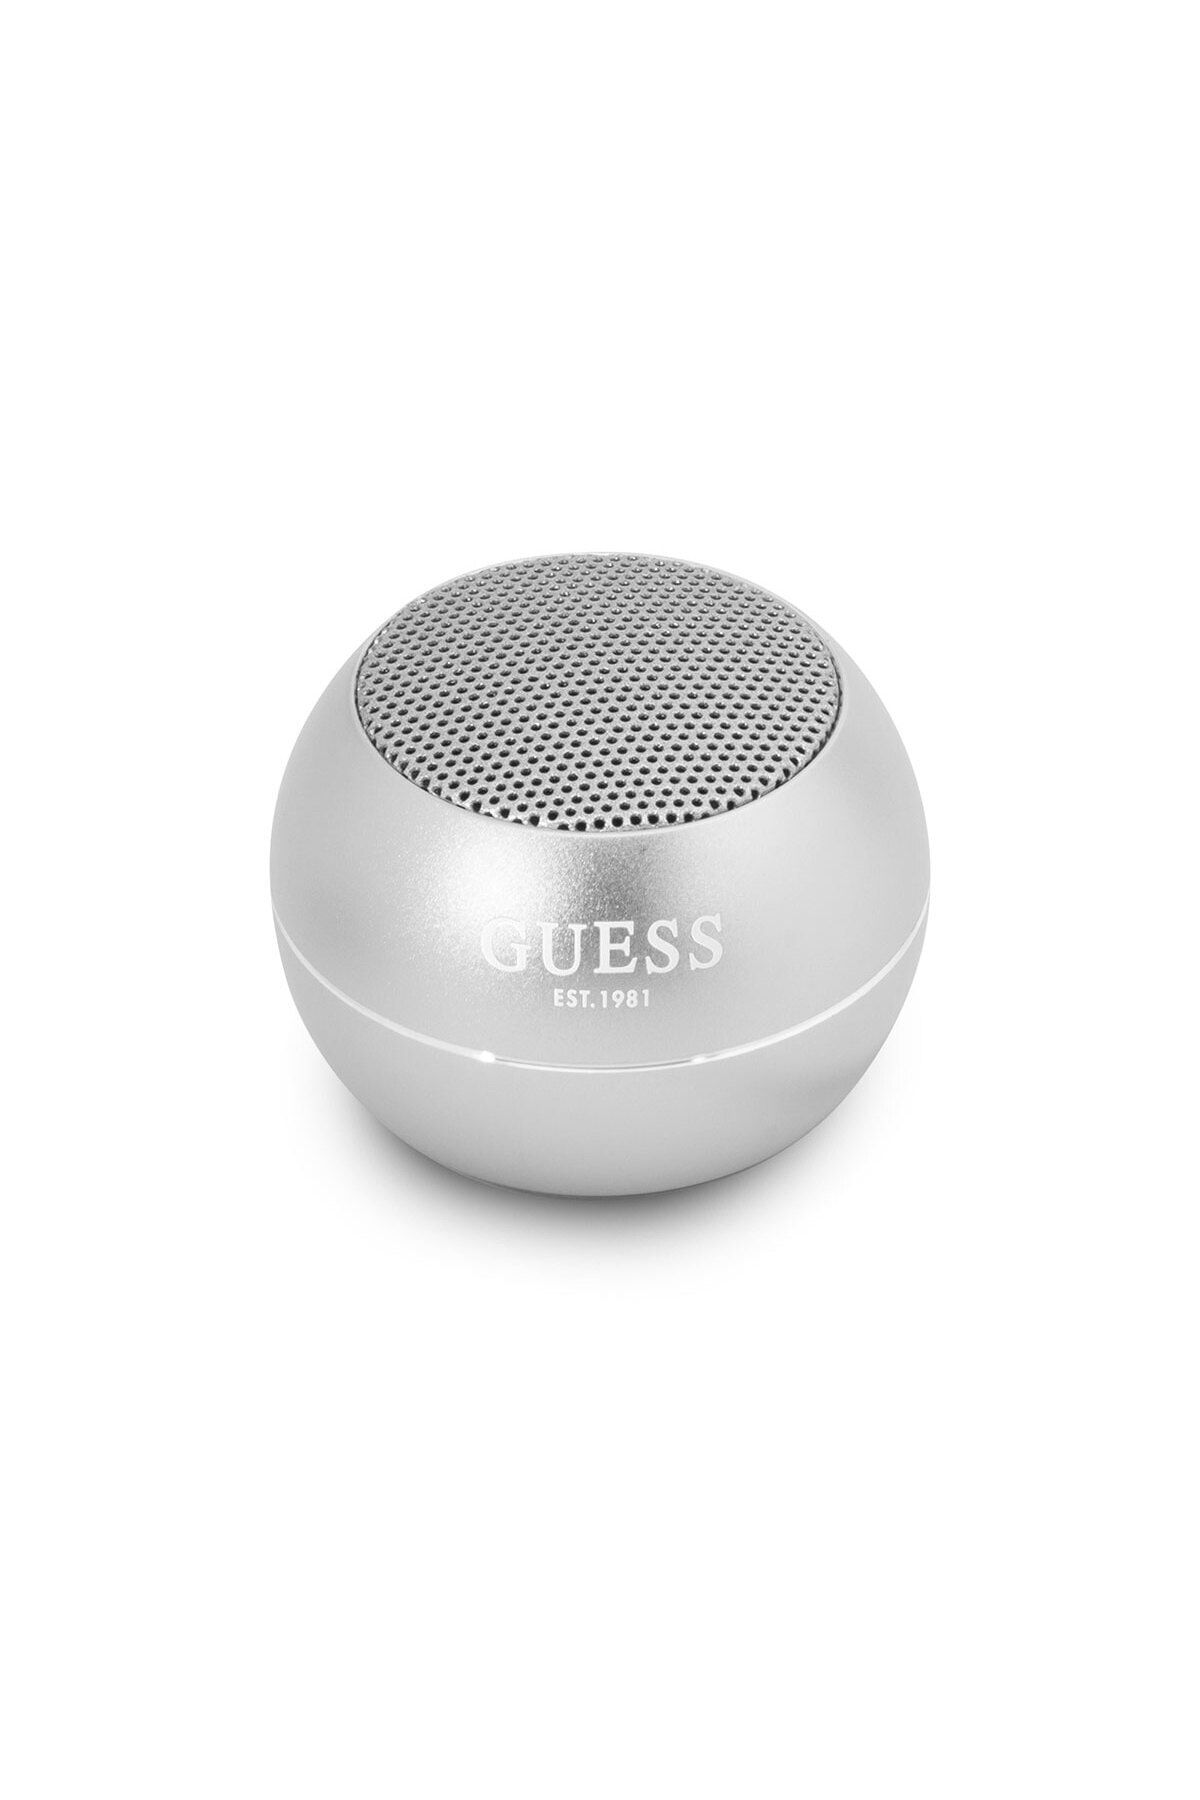 Guess Mini Bluetooth Speaker GUESS Alüminyum Alaşım Gövde Tasarımlı Hoparlör Portable Gri